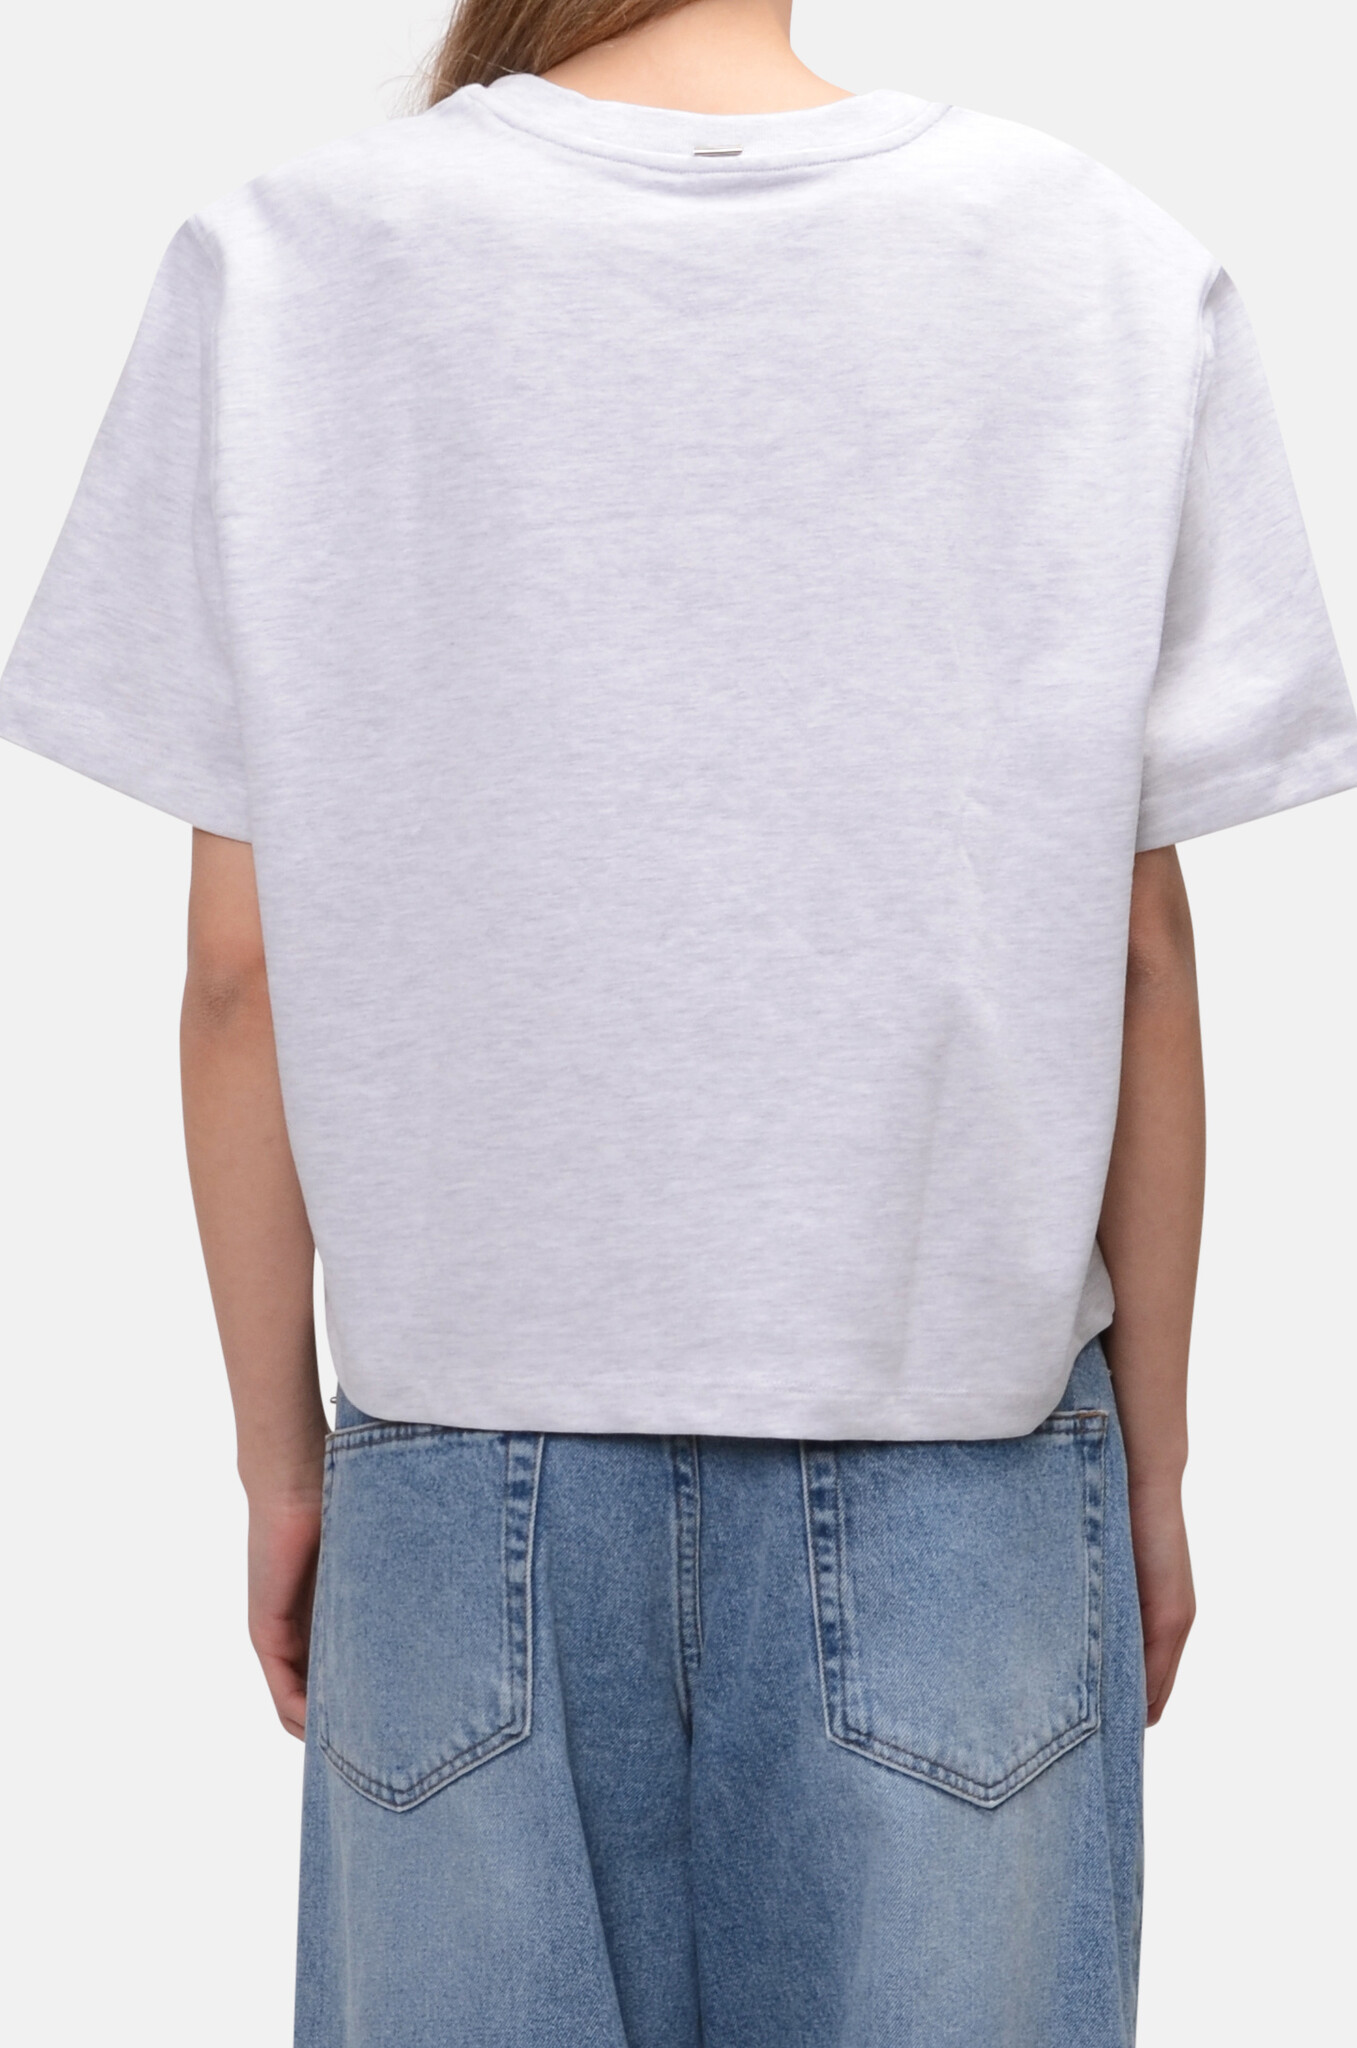 Printed T-shirt in Light Grey-4